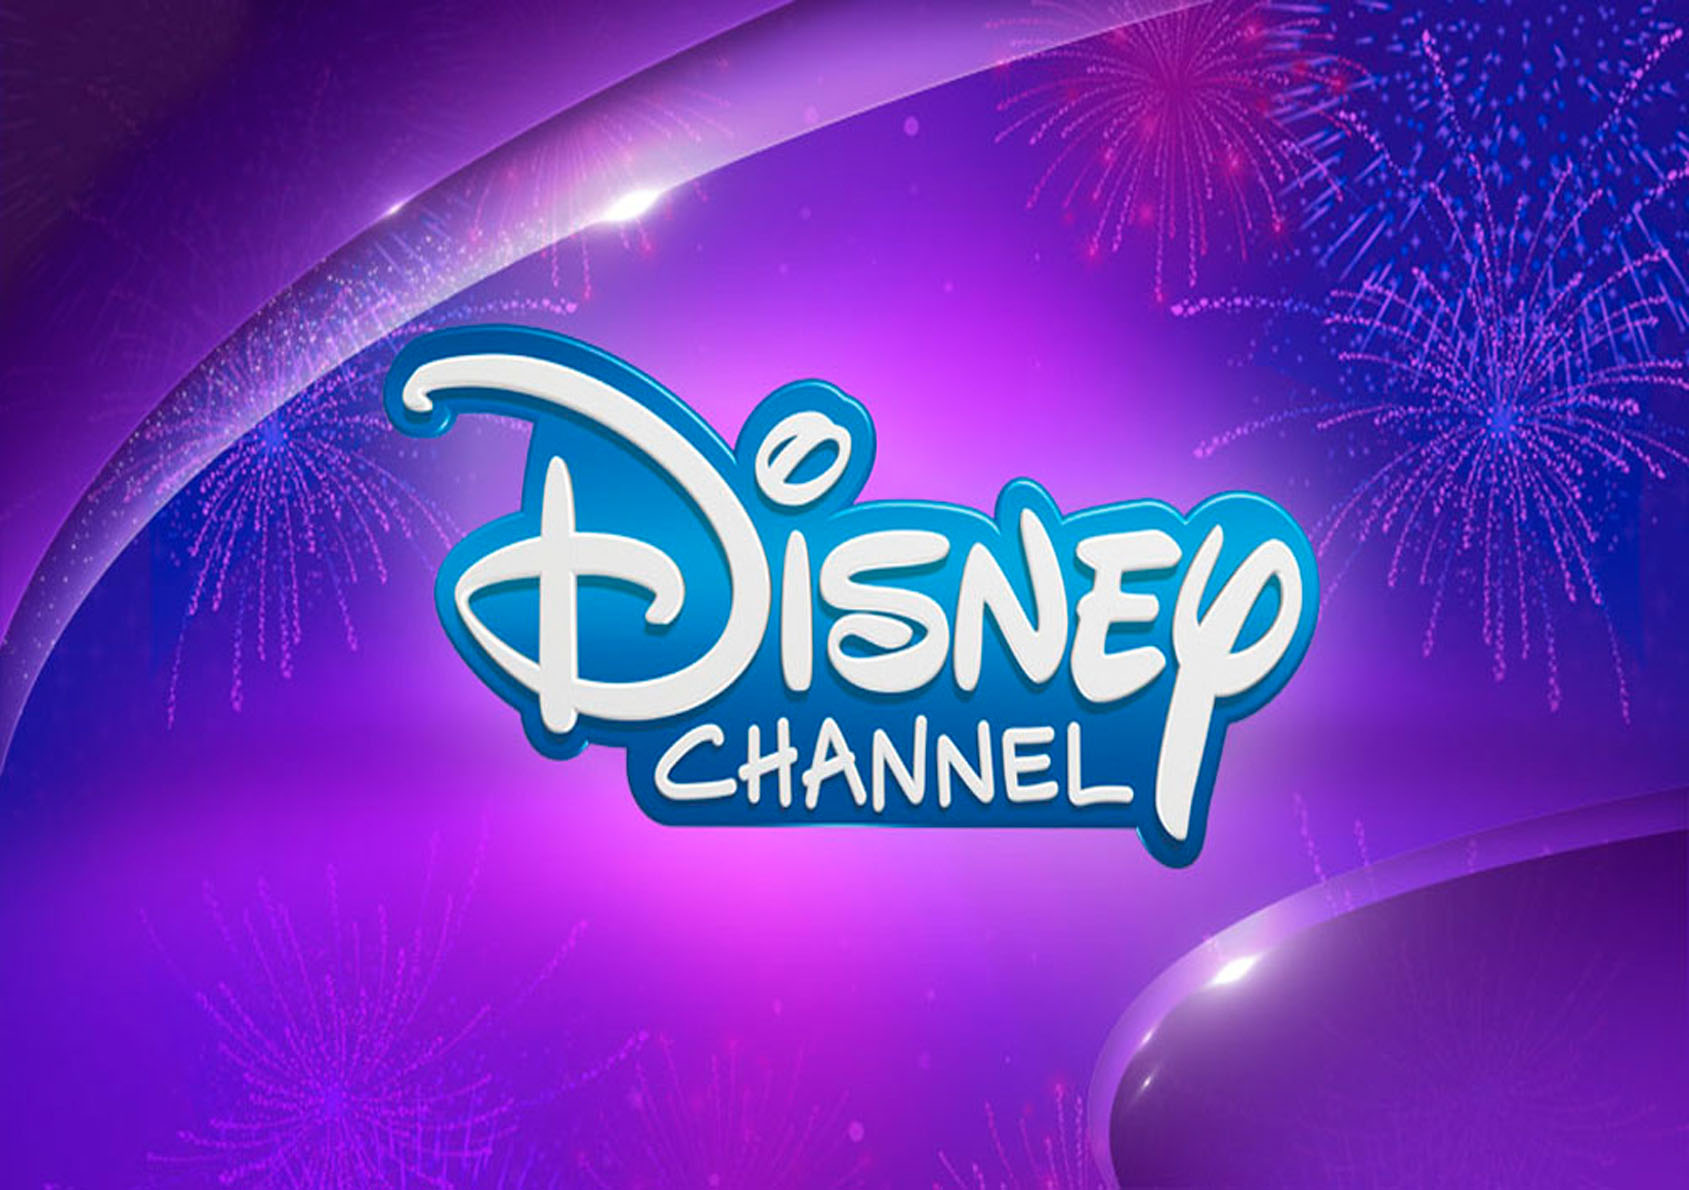 Эфир телеканала дисней. Канал Дисней. Канал Дисней картинки. Логотип Disney channel. Дисней Телеканал логотип.